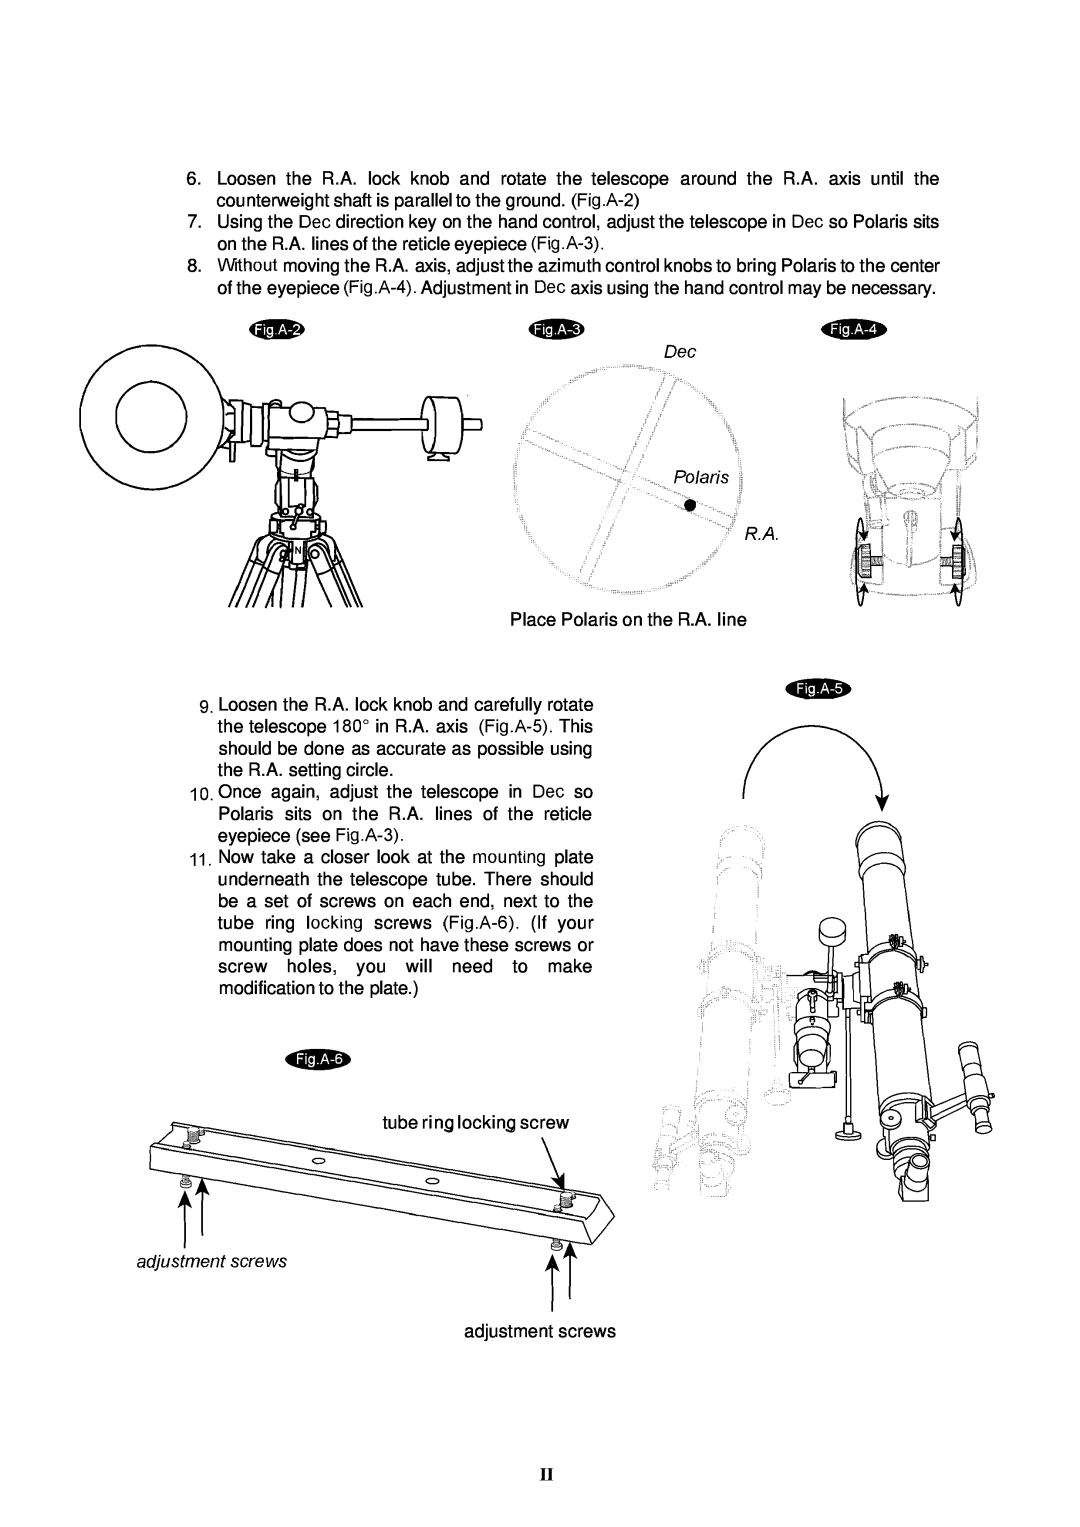 Nexstar SynScan instruction manual Place Polaris on the R.A. line, tube ring locking screw, adjustment screws 